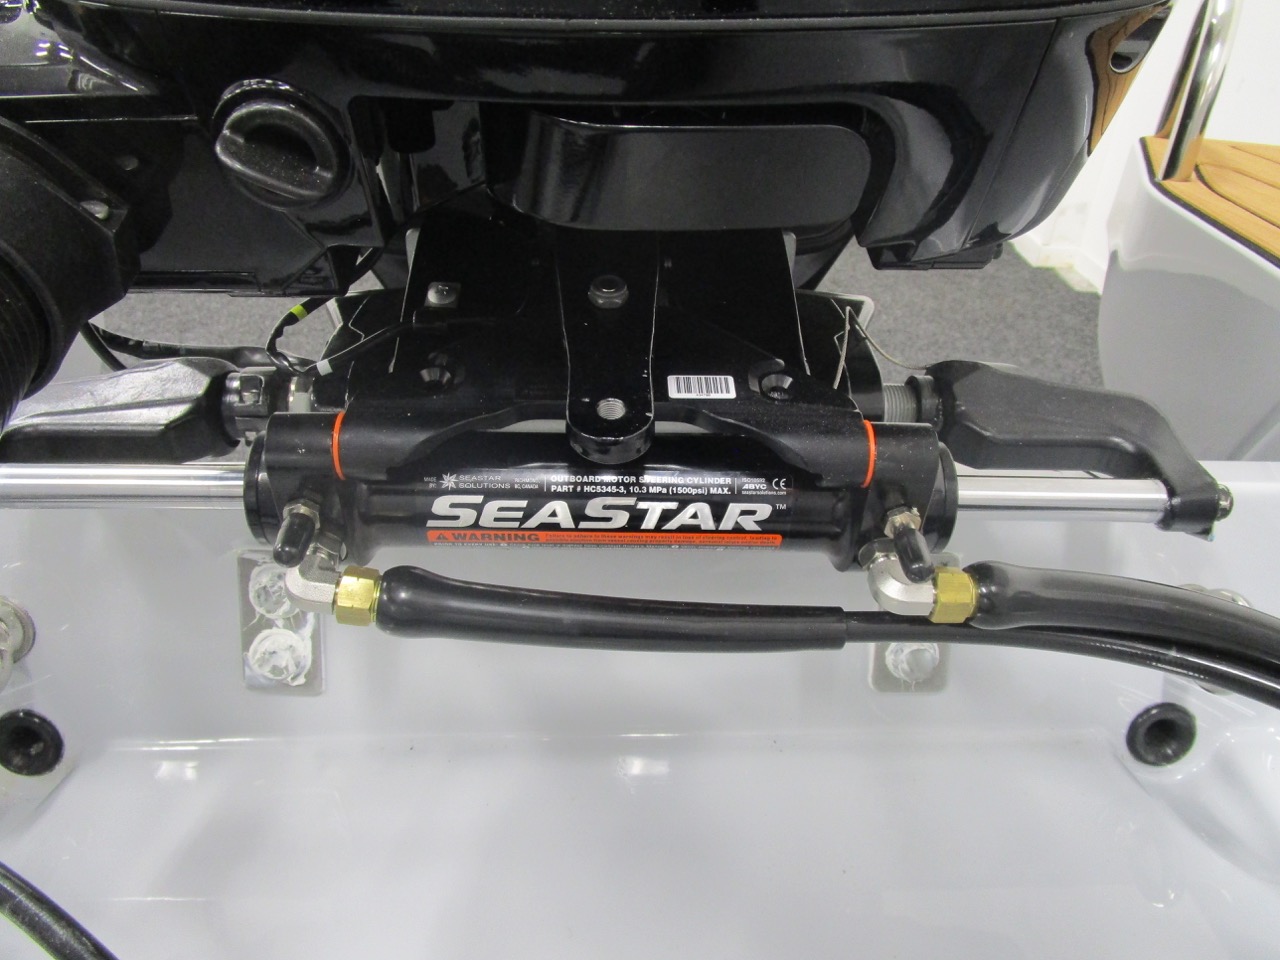 Seastar hydraulic steering with power assist pump